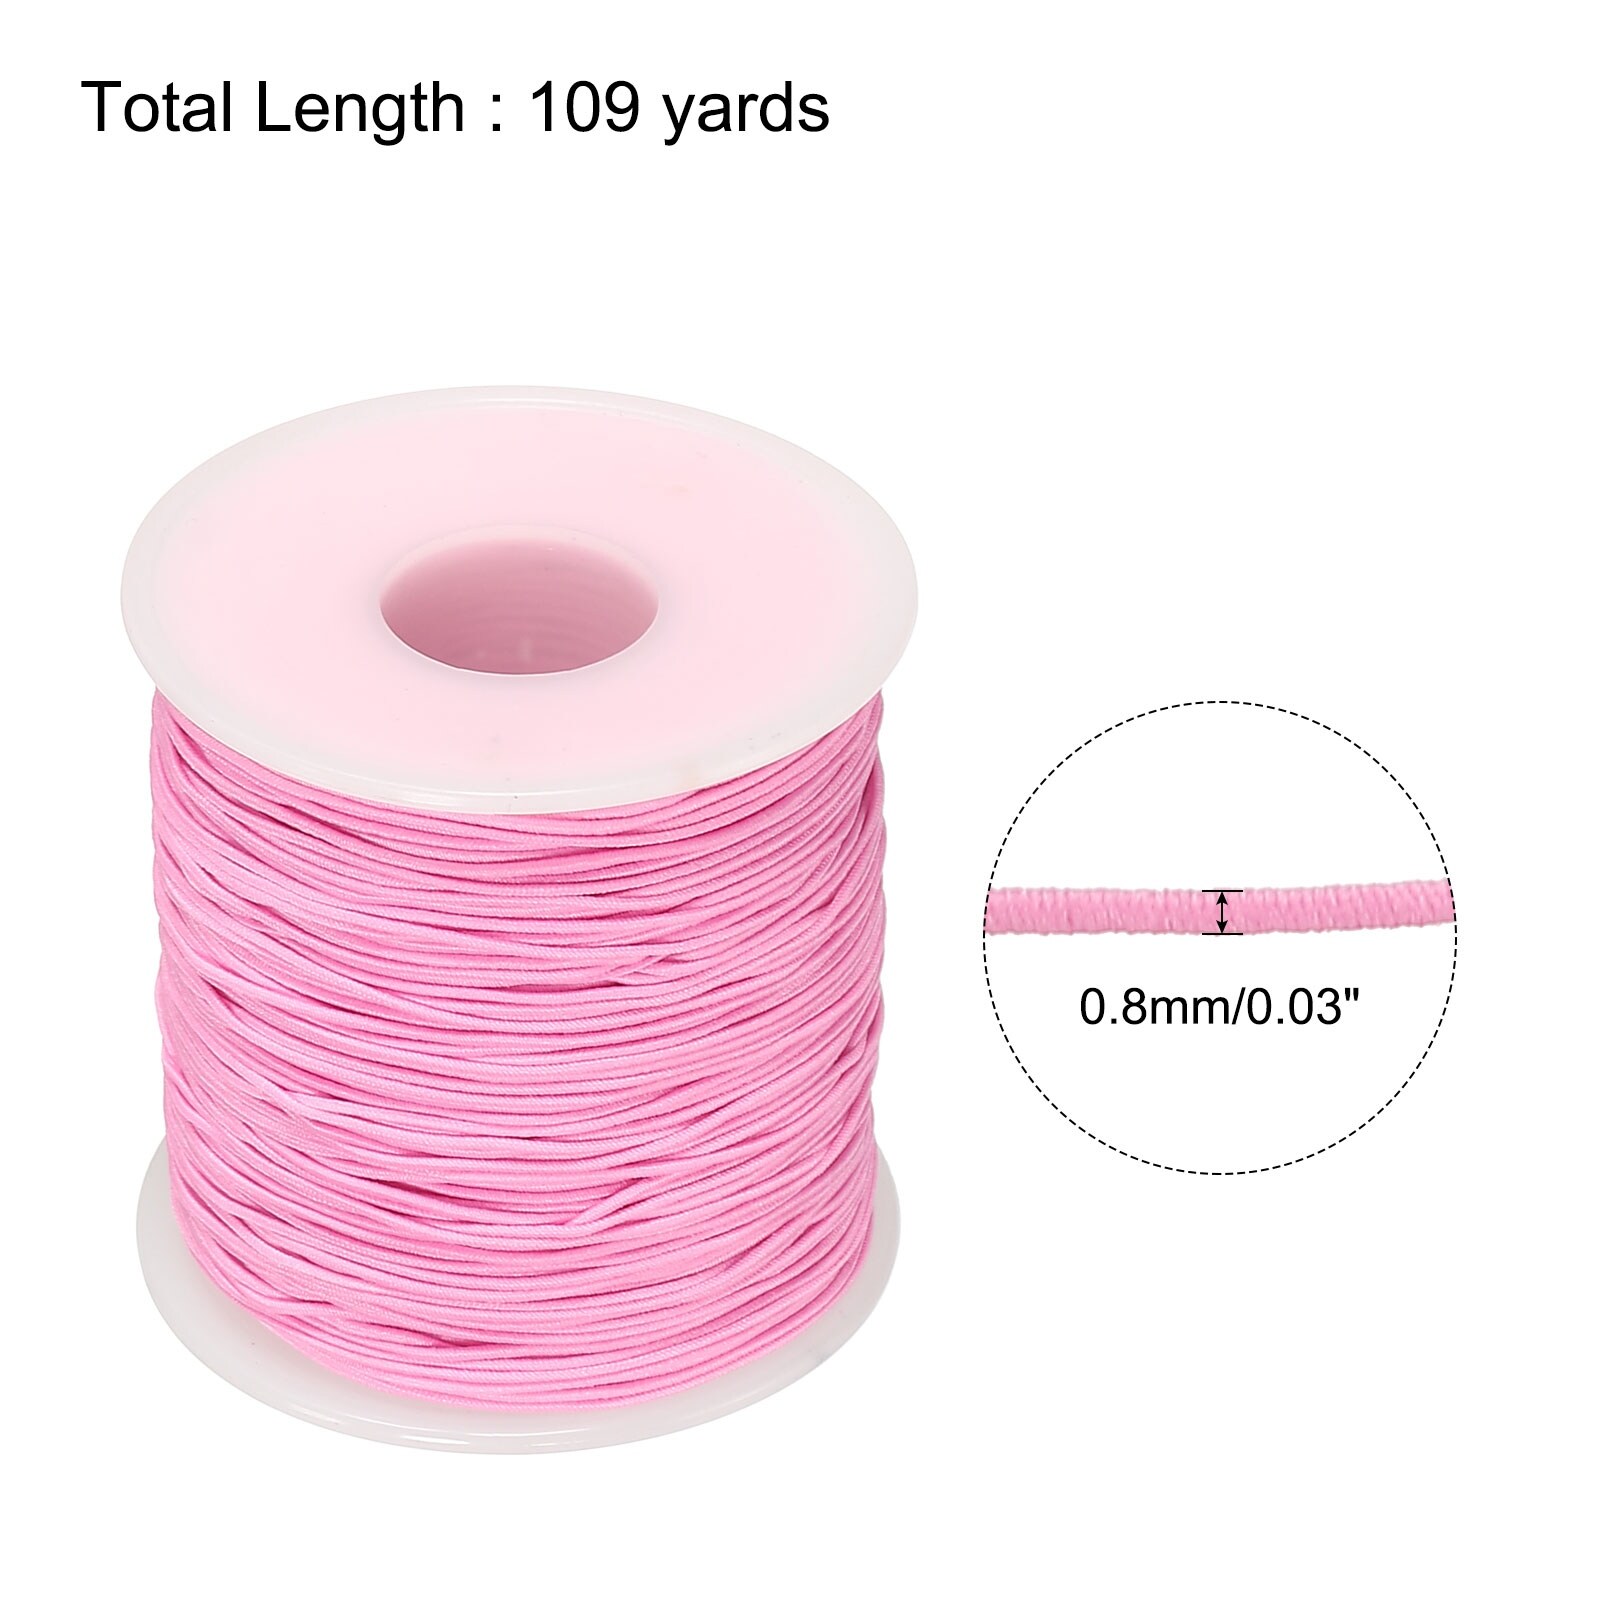 Elastic Cord Stretchy String 0.8mm 109 Yards Dark Pink for Crafts - Dark Pink